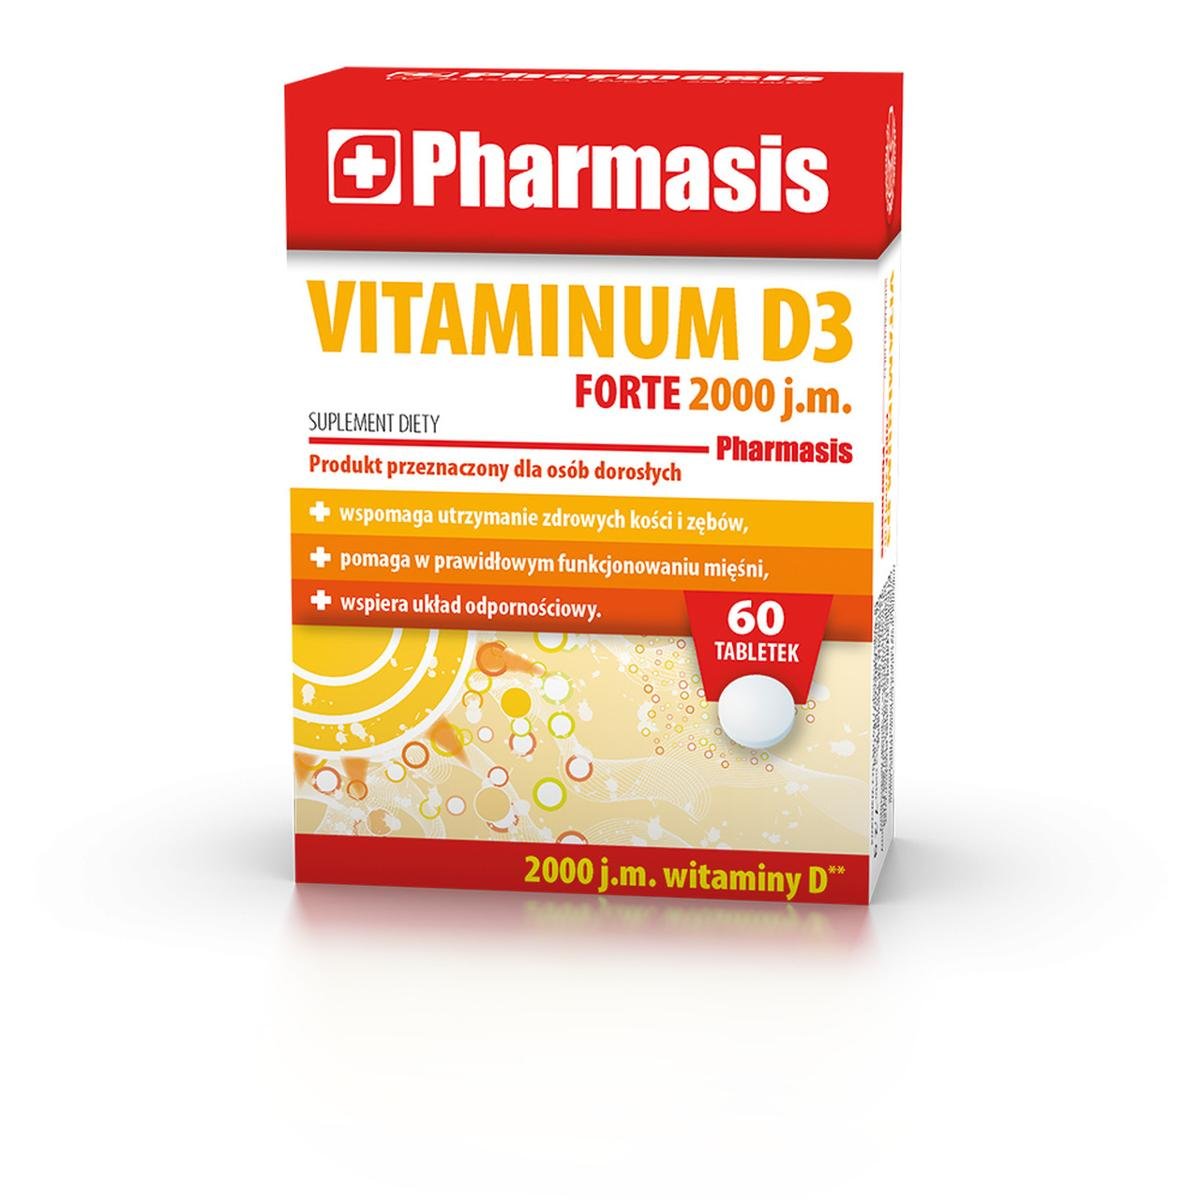 Pharmasis EKSPRES APTECZNY Vitaminum D3 Forte 2000 j.m. 60 tabletek